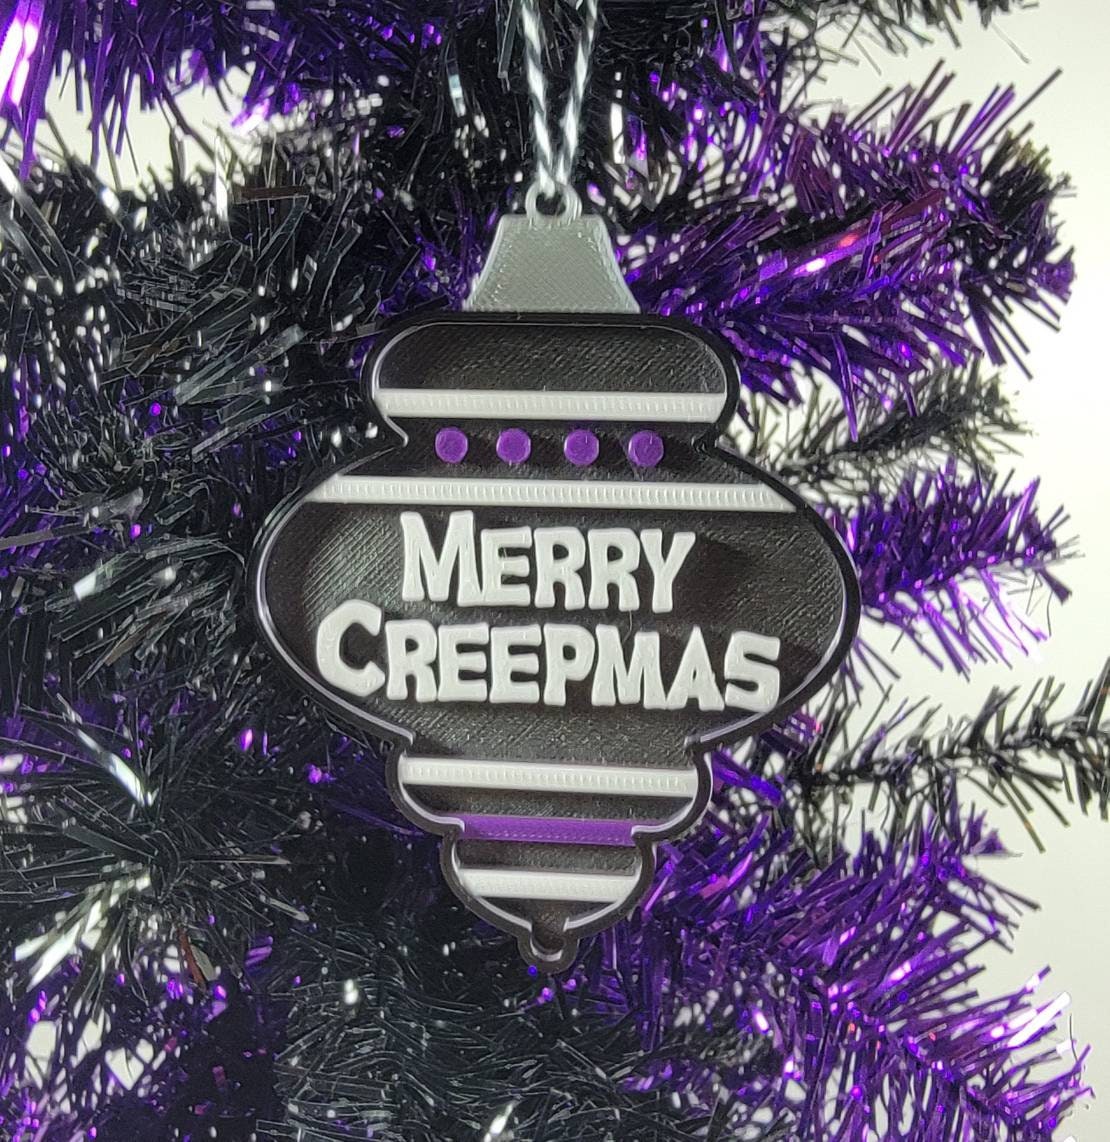 Merry Creepmas 3D Printed Spooky Christmas Ornament